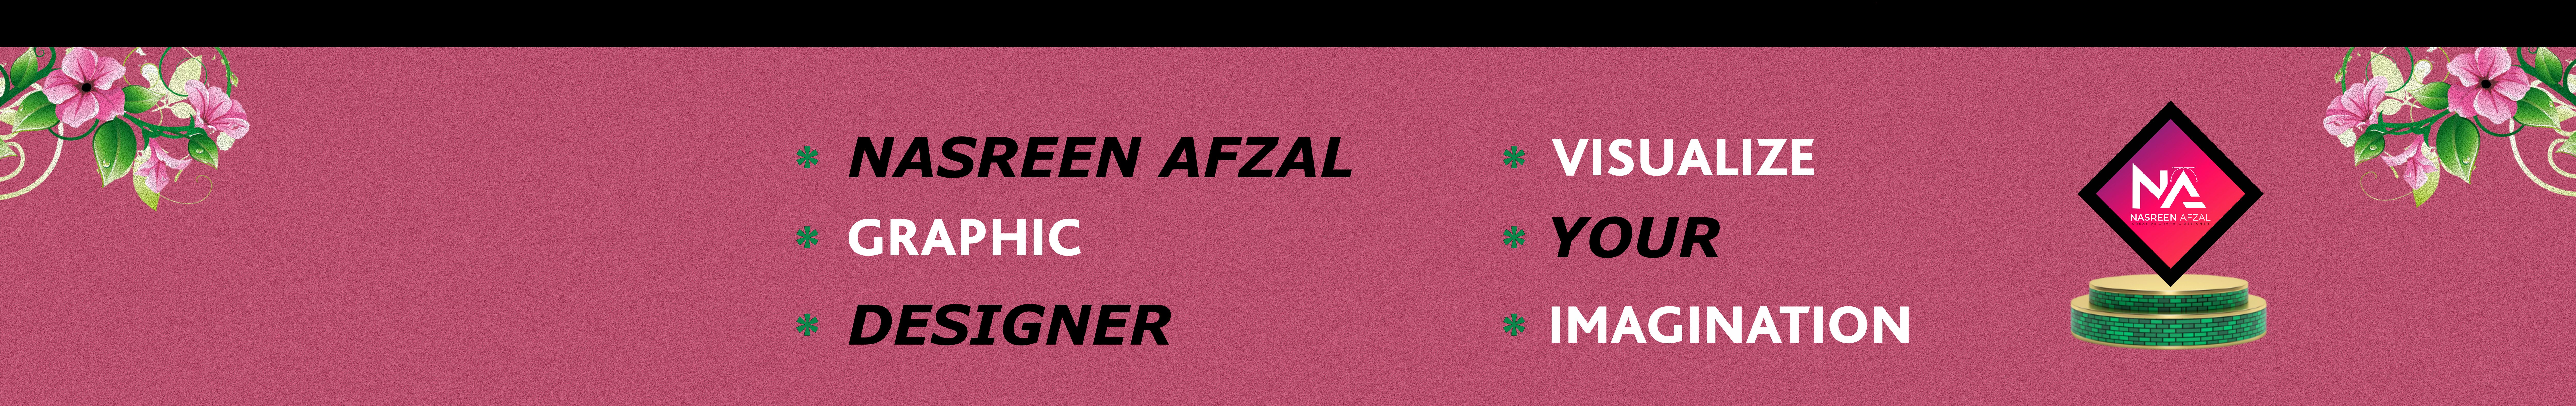 Nasreen Afzal's profile banner